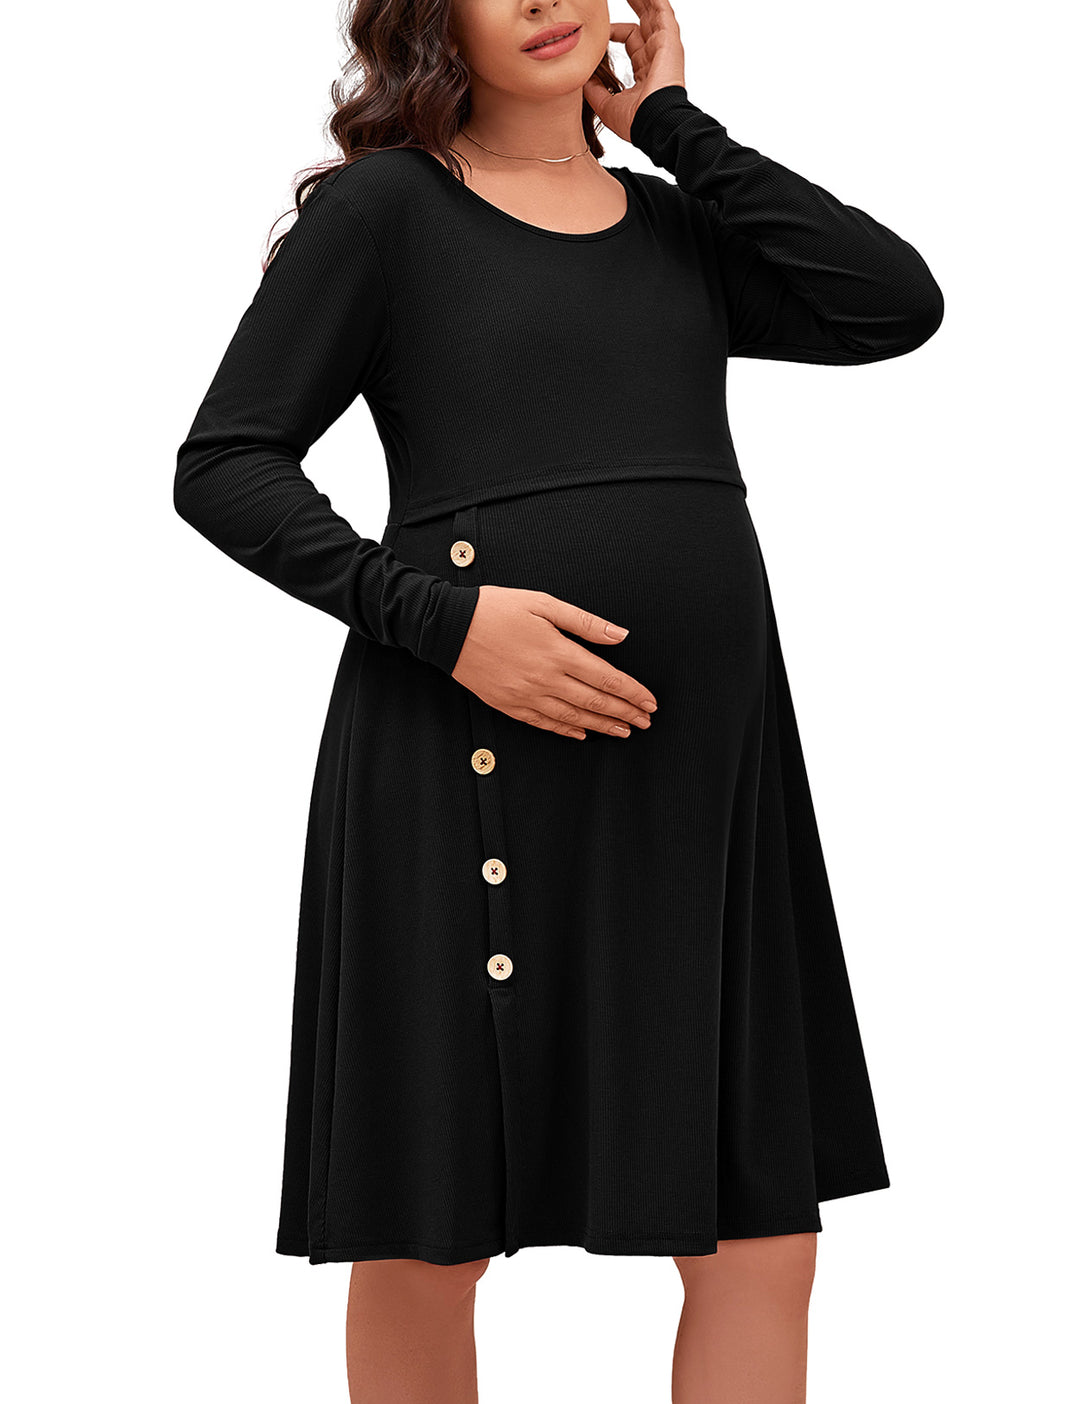 Maternity Dress for Breastfeeding in Knee Length